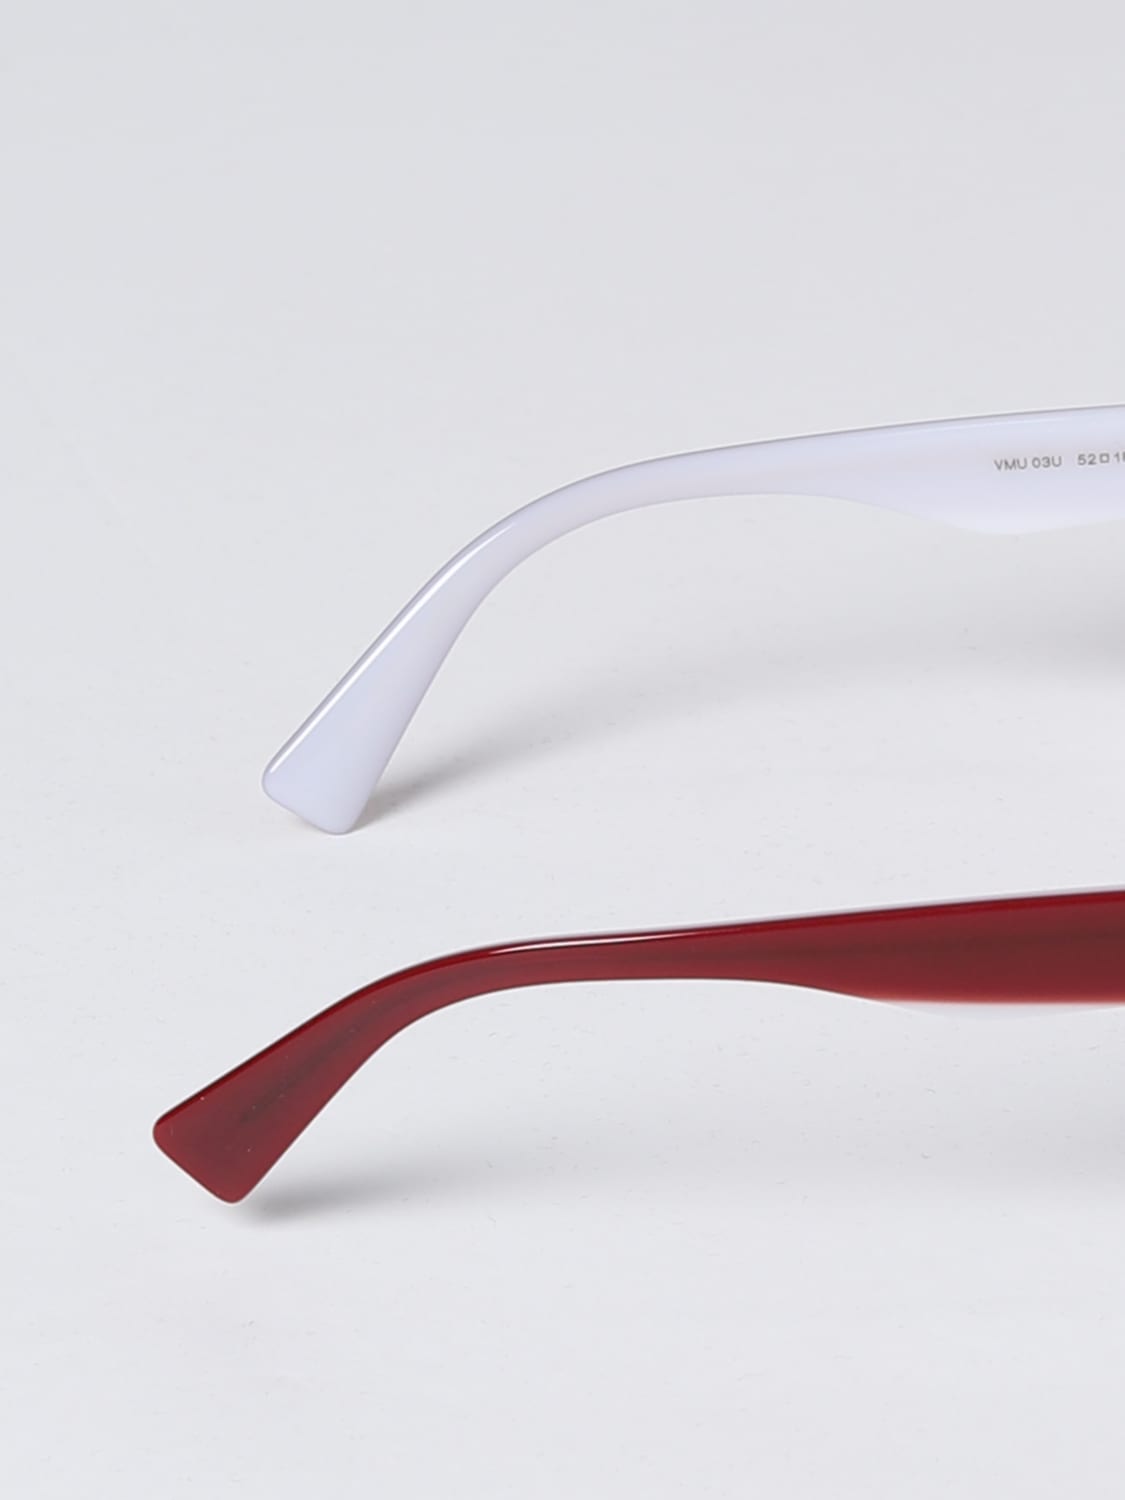 Optical frames Miu Miu: Miu Miu optical frames for women burgundy 2